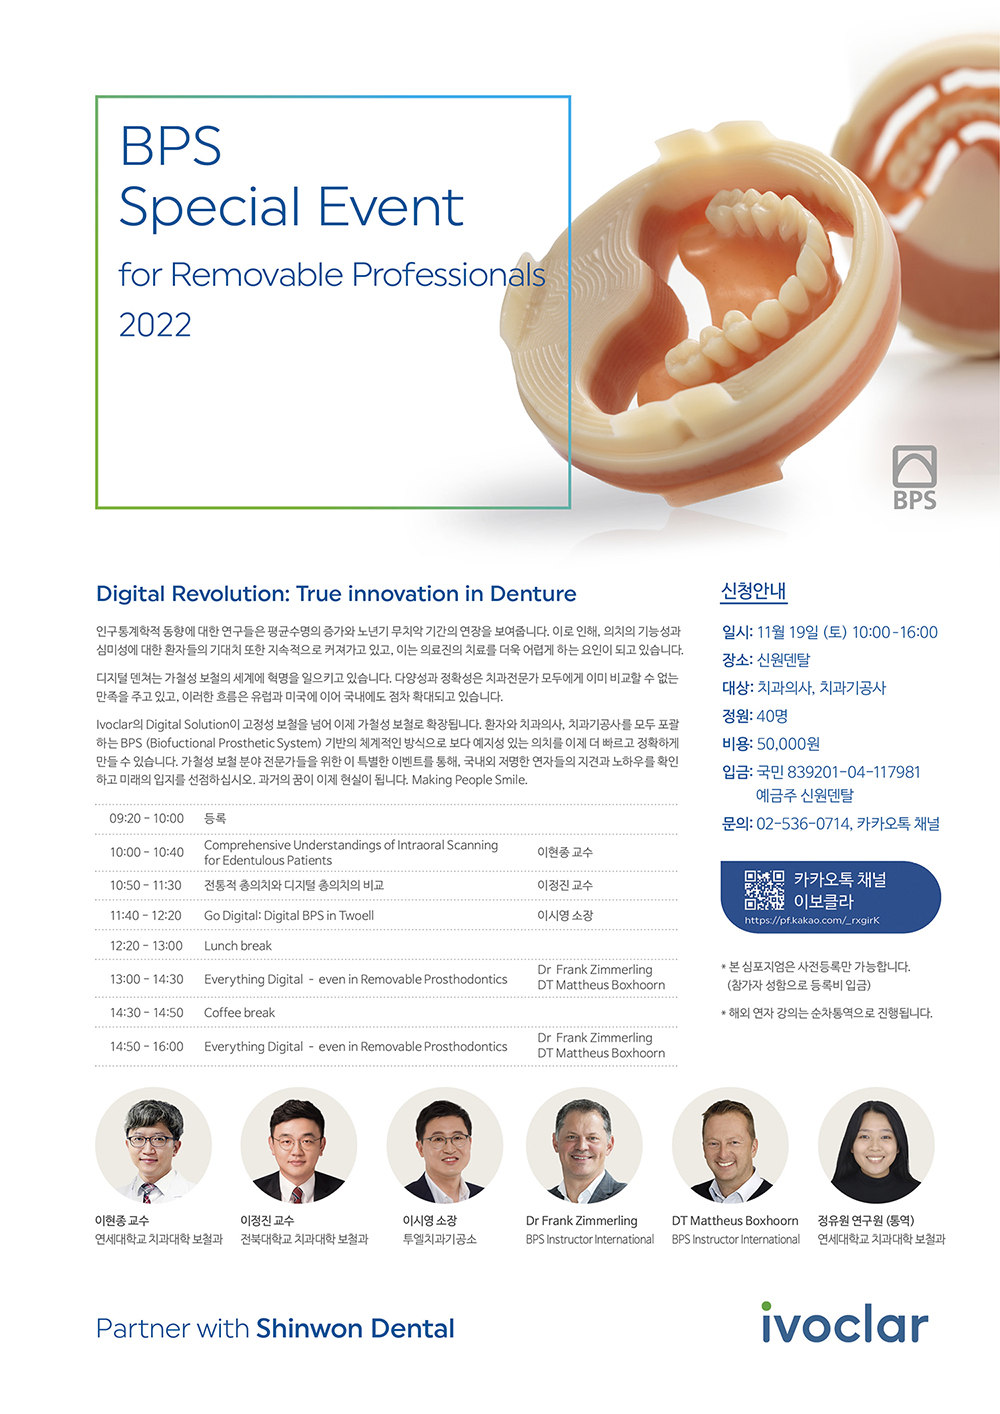 Ivoclar_BPS Event 2022_dental2804_1000px.jpg